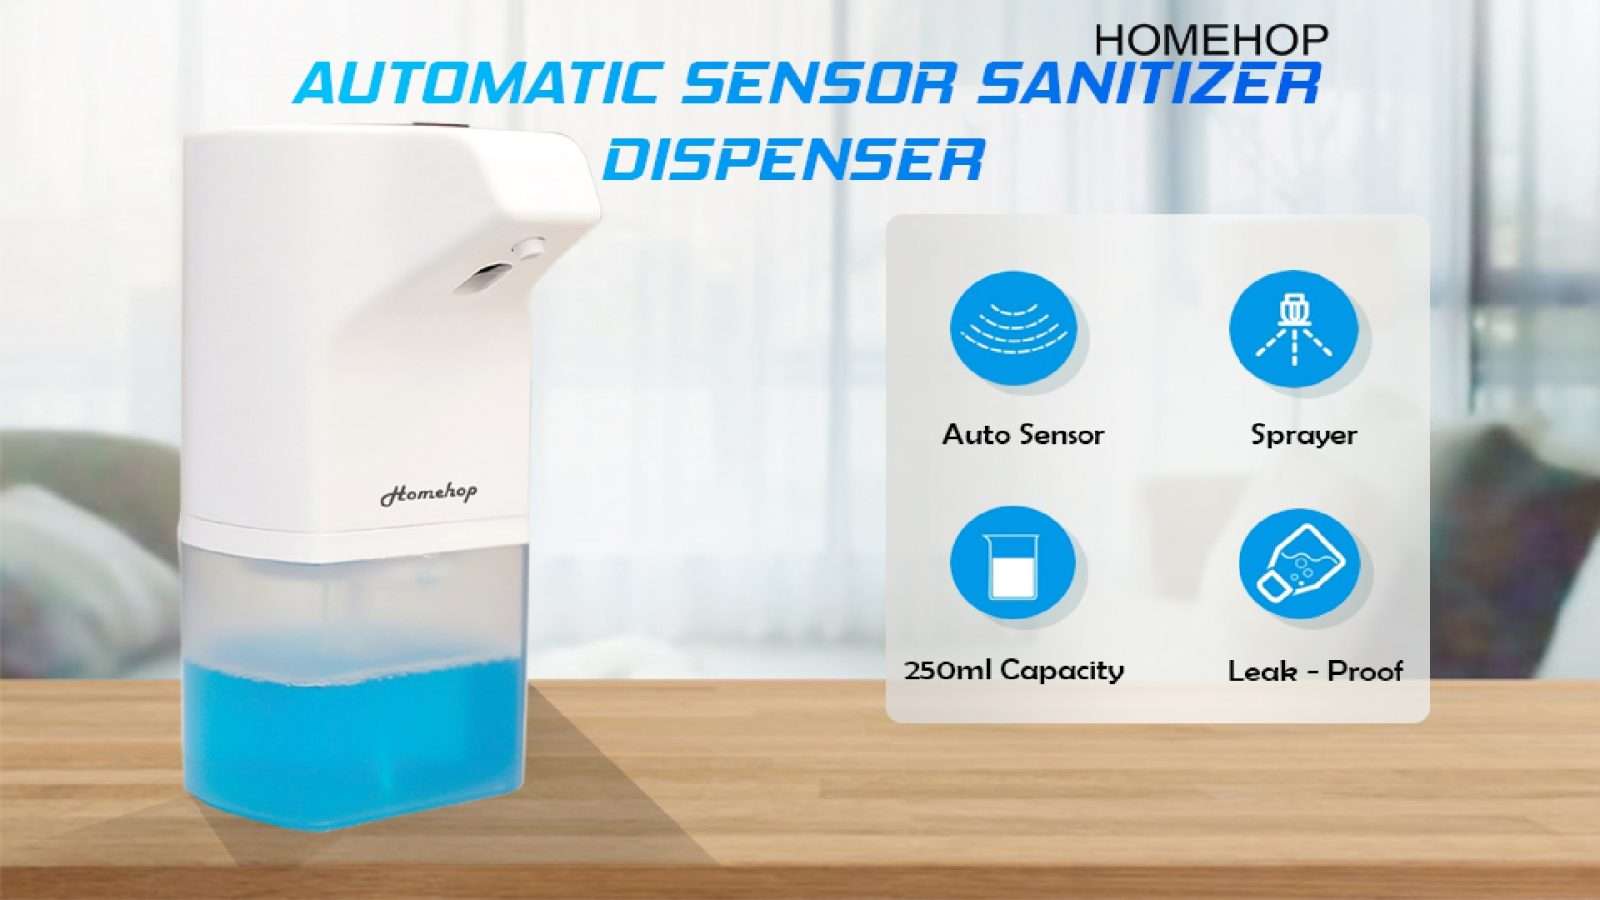 Homehop automatic sensor sanitizer dispenser